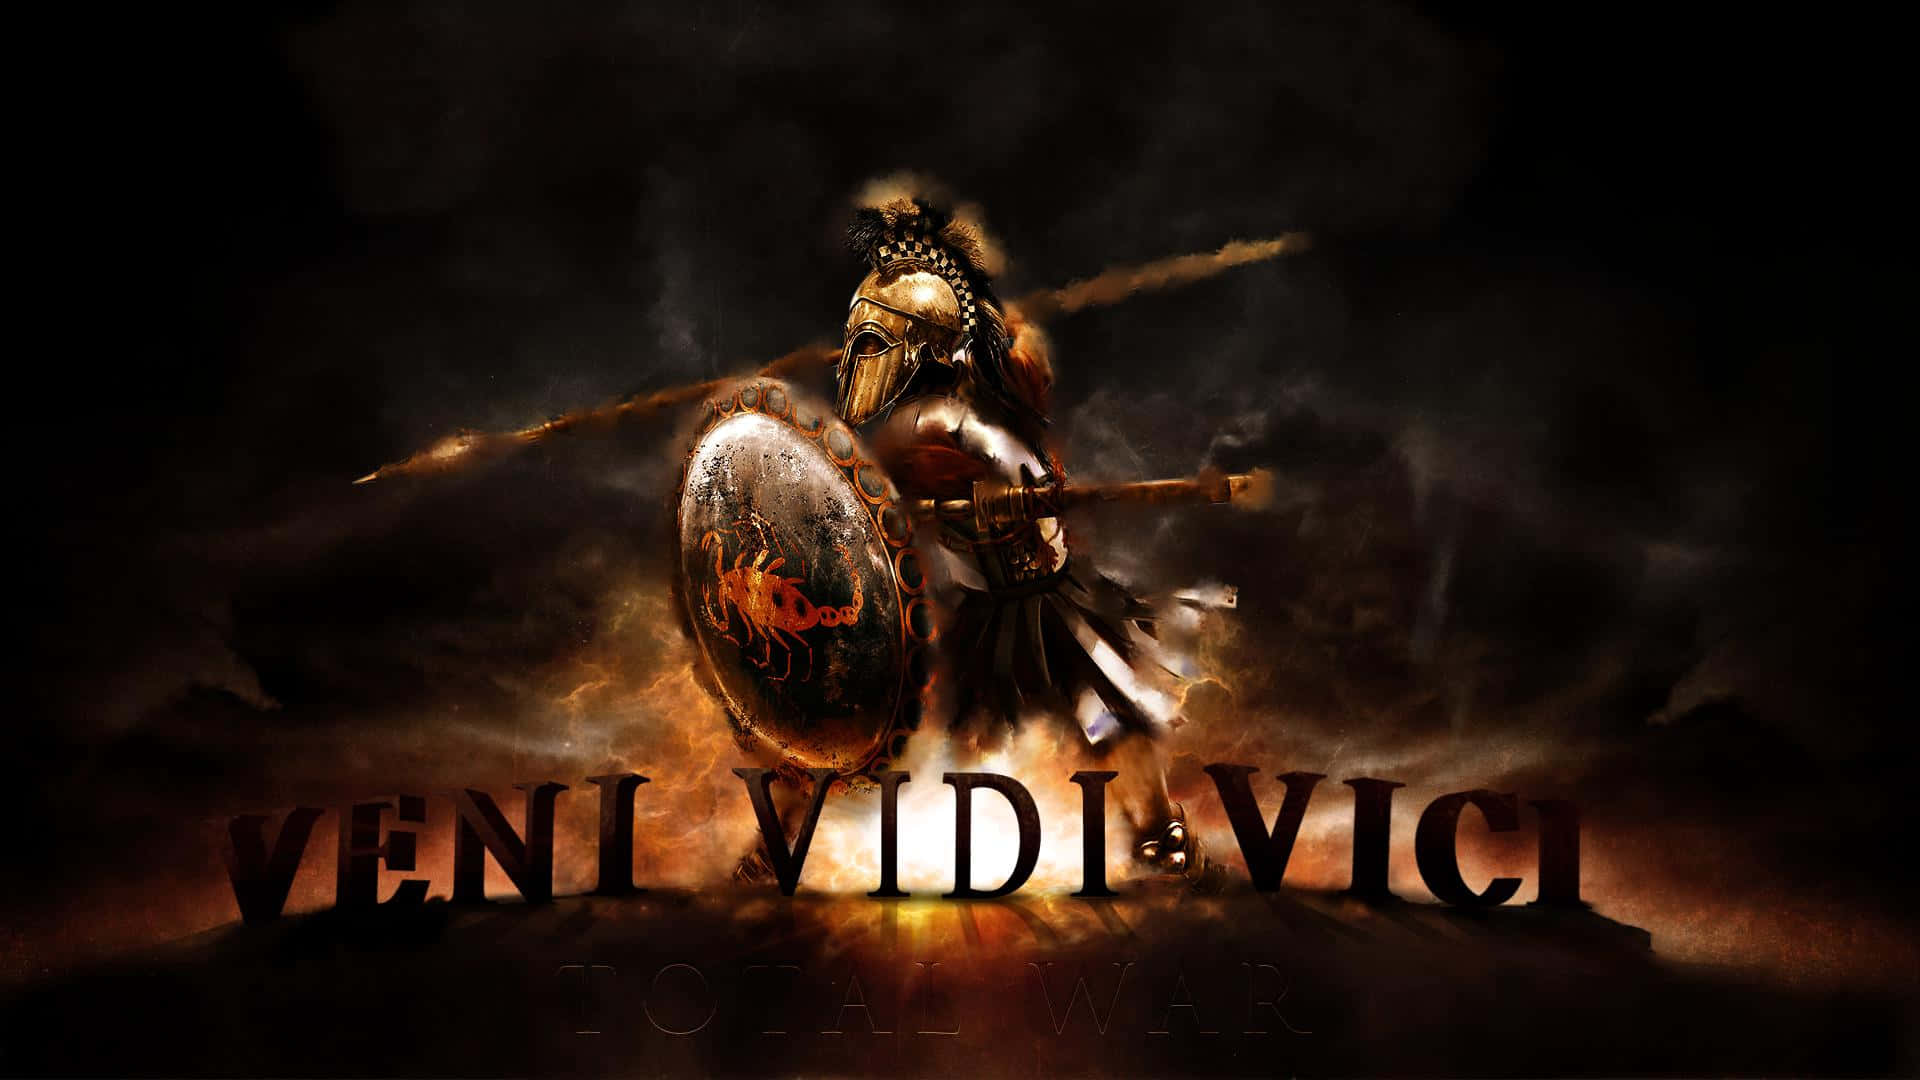 Best Total War Rome 2 Background Warrior Armor